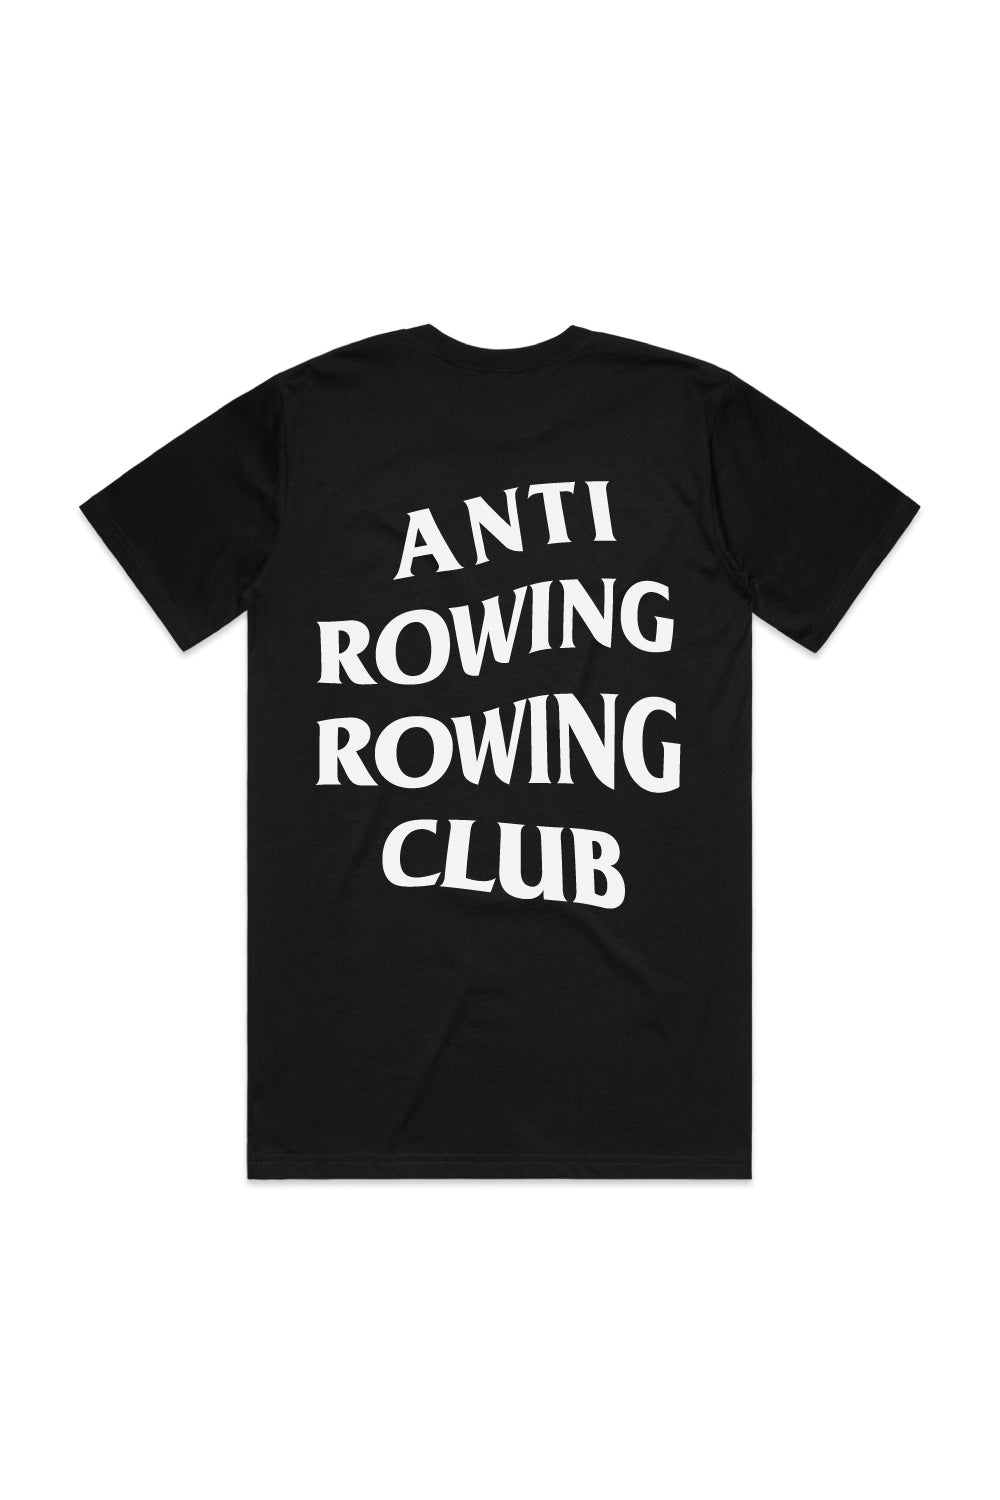 Anti Rowing Rowing Club